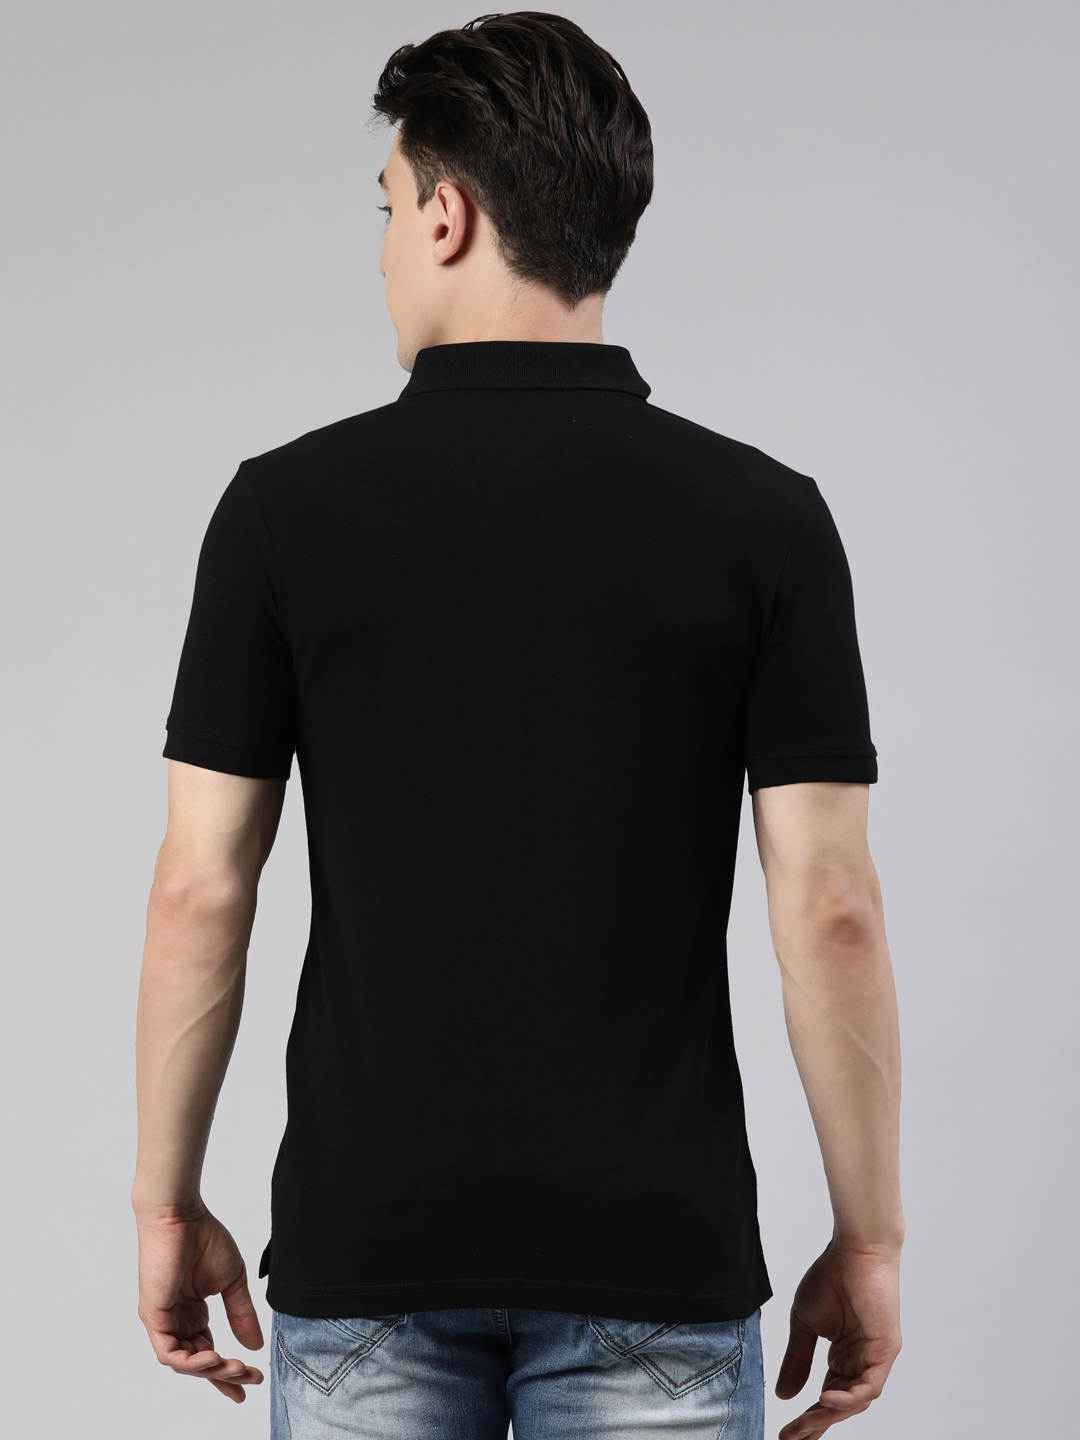 FASO 100% Super Combed Cotton Solid Half Sleeve Polo T-Shirt - FA 5002 ...